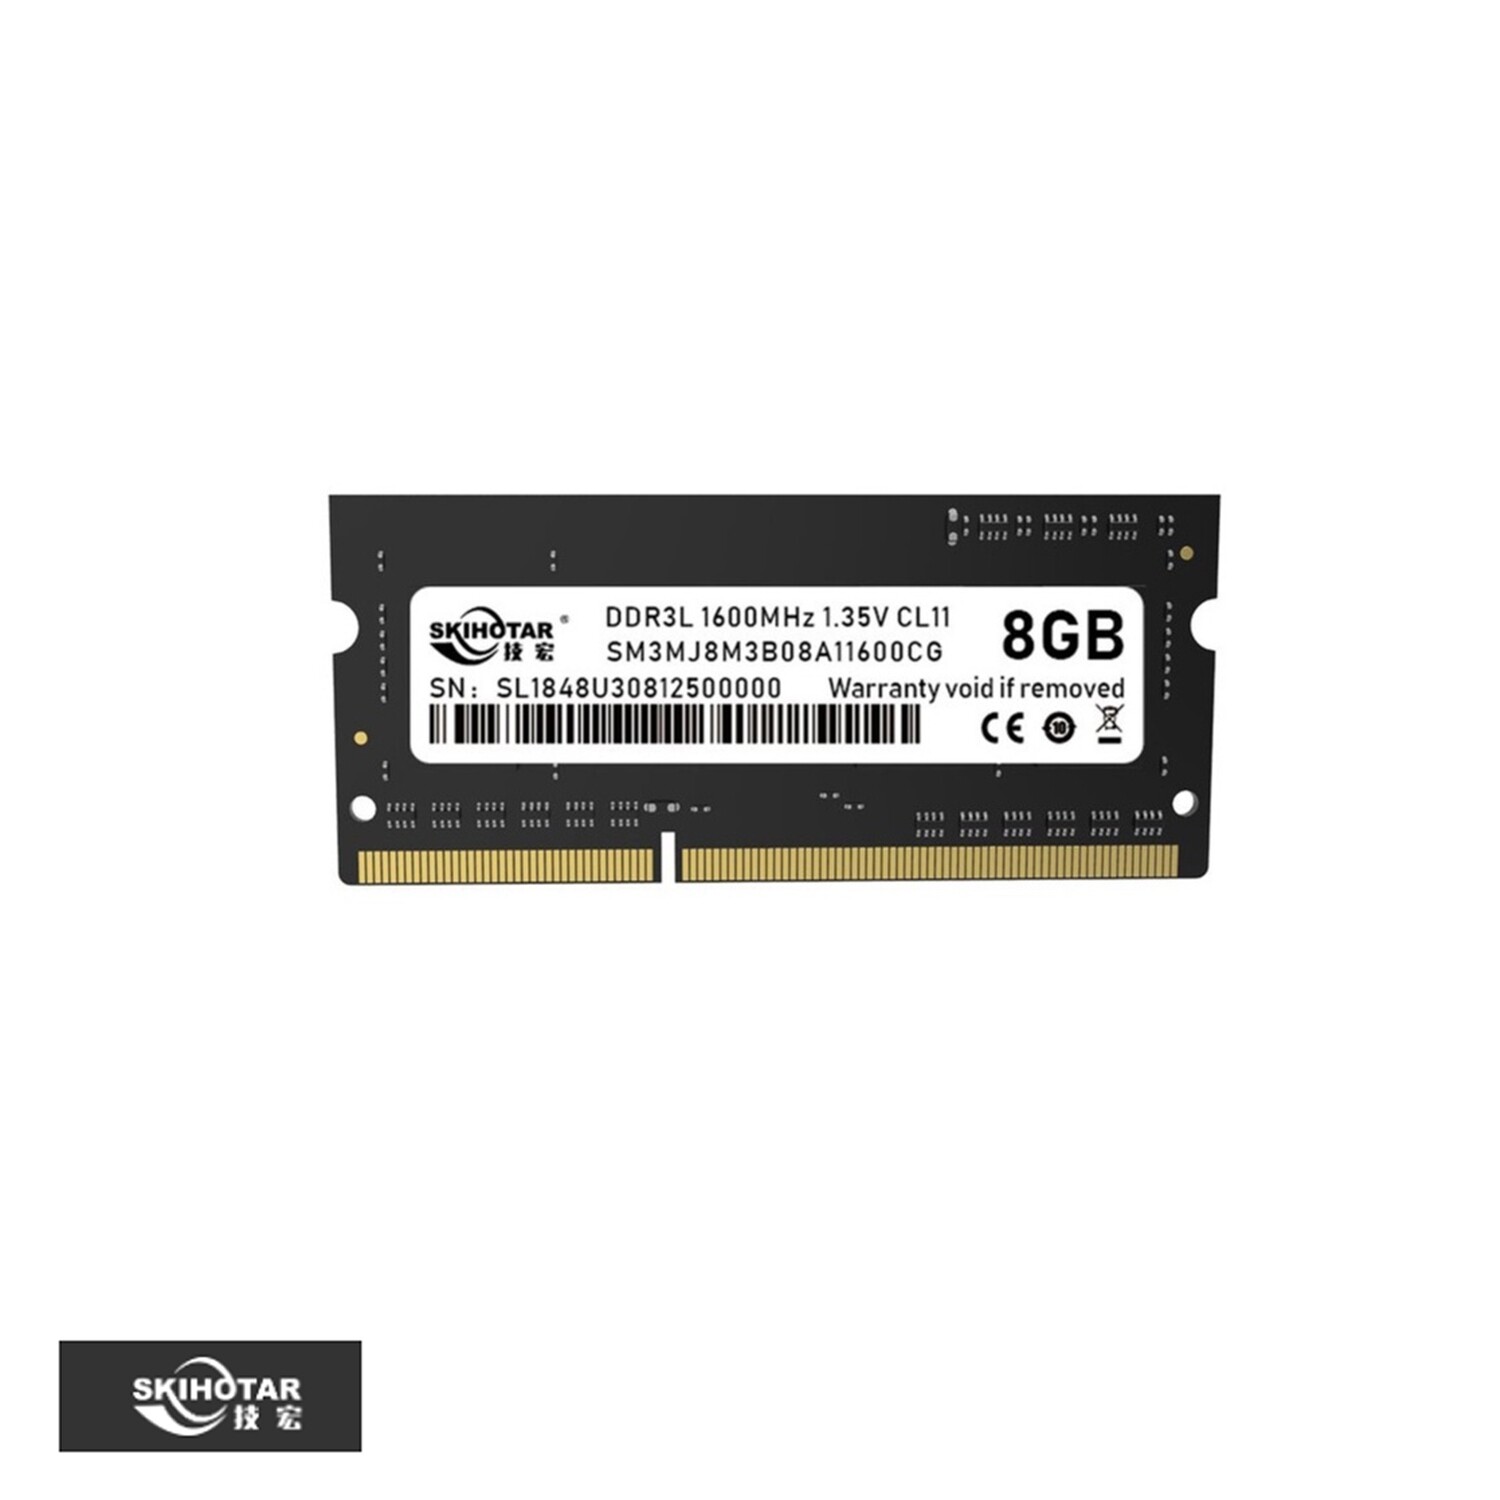 SKIHOTAR RAM (8GB DDR3L 1600MHZ SO-DIMM) BEST FOR NOTEBOOK/ LAPTOP ONLY 8GB DDR3L SODIMM, 1.35V